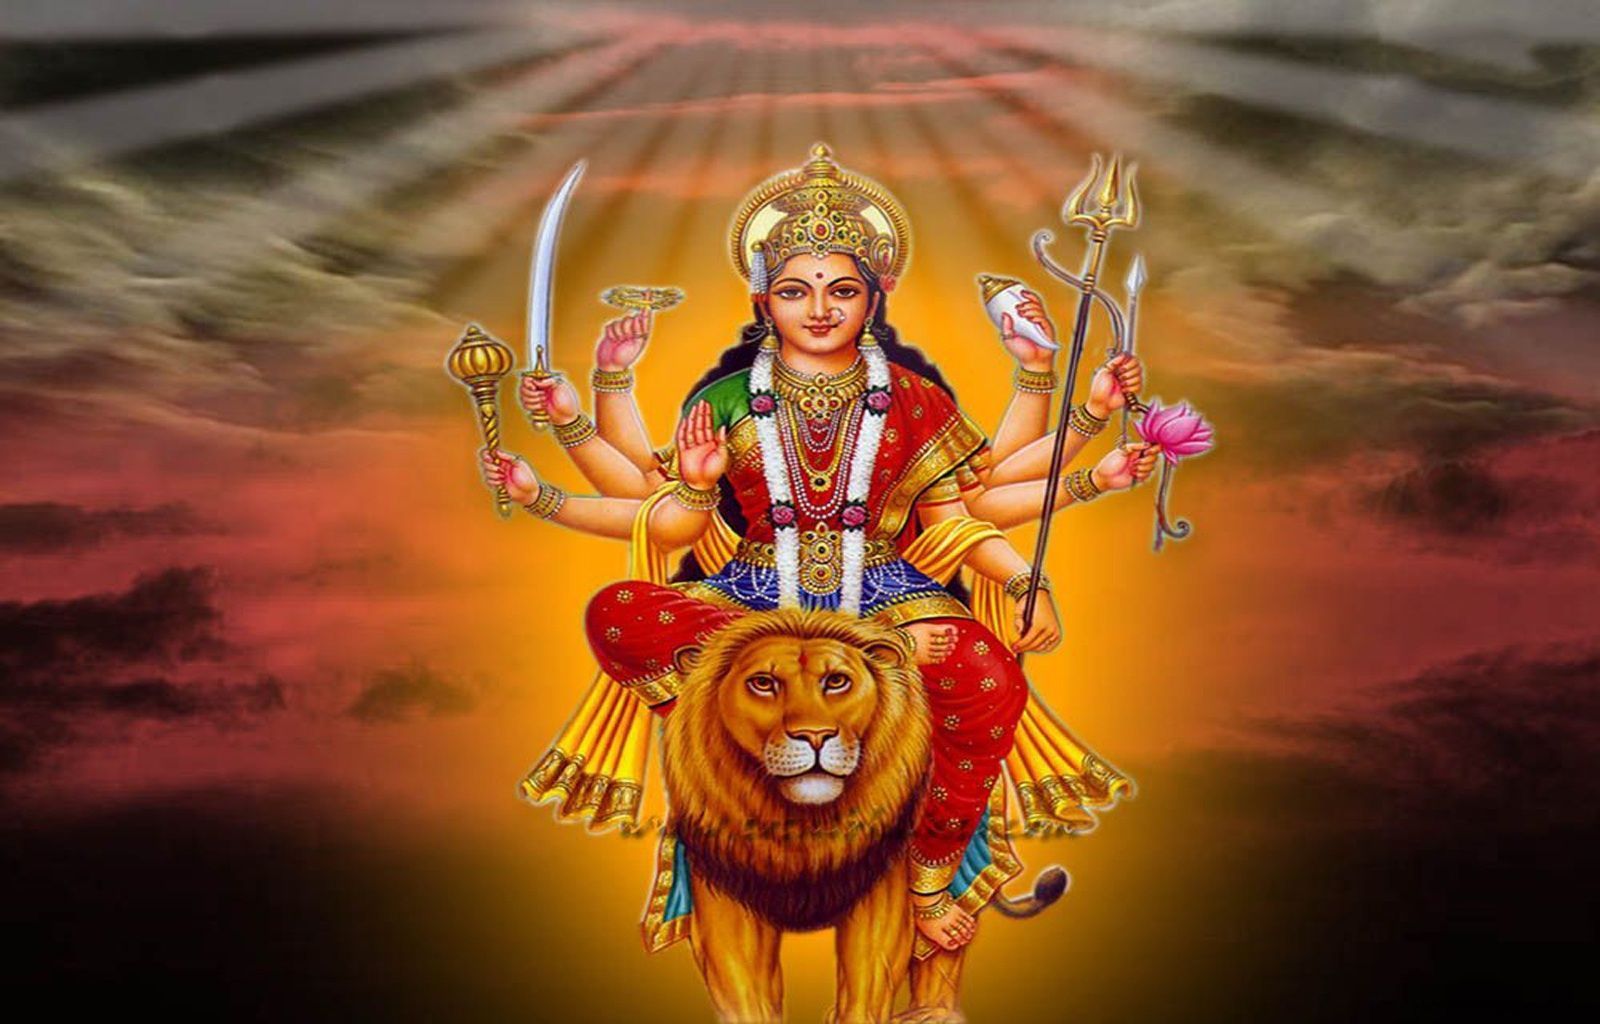 1080p HD Maa Durga wallpapers images Pictures | Durga Maa Wallpapers